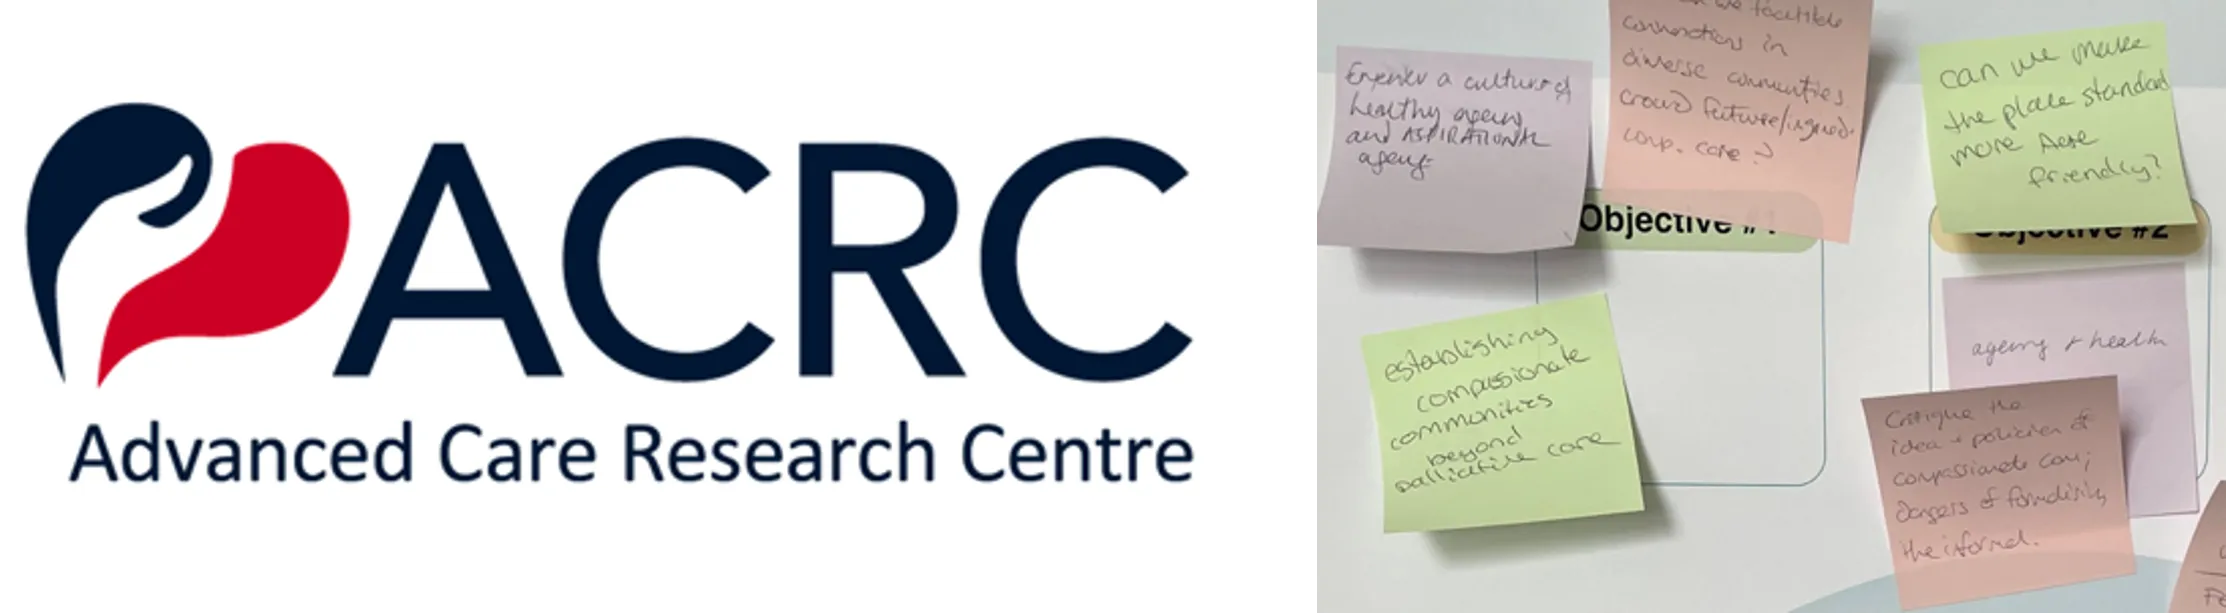 ACRC - Advanced Care Research Centre_HWL article